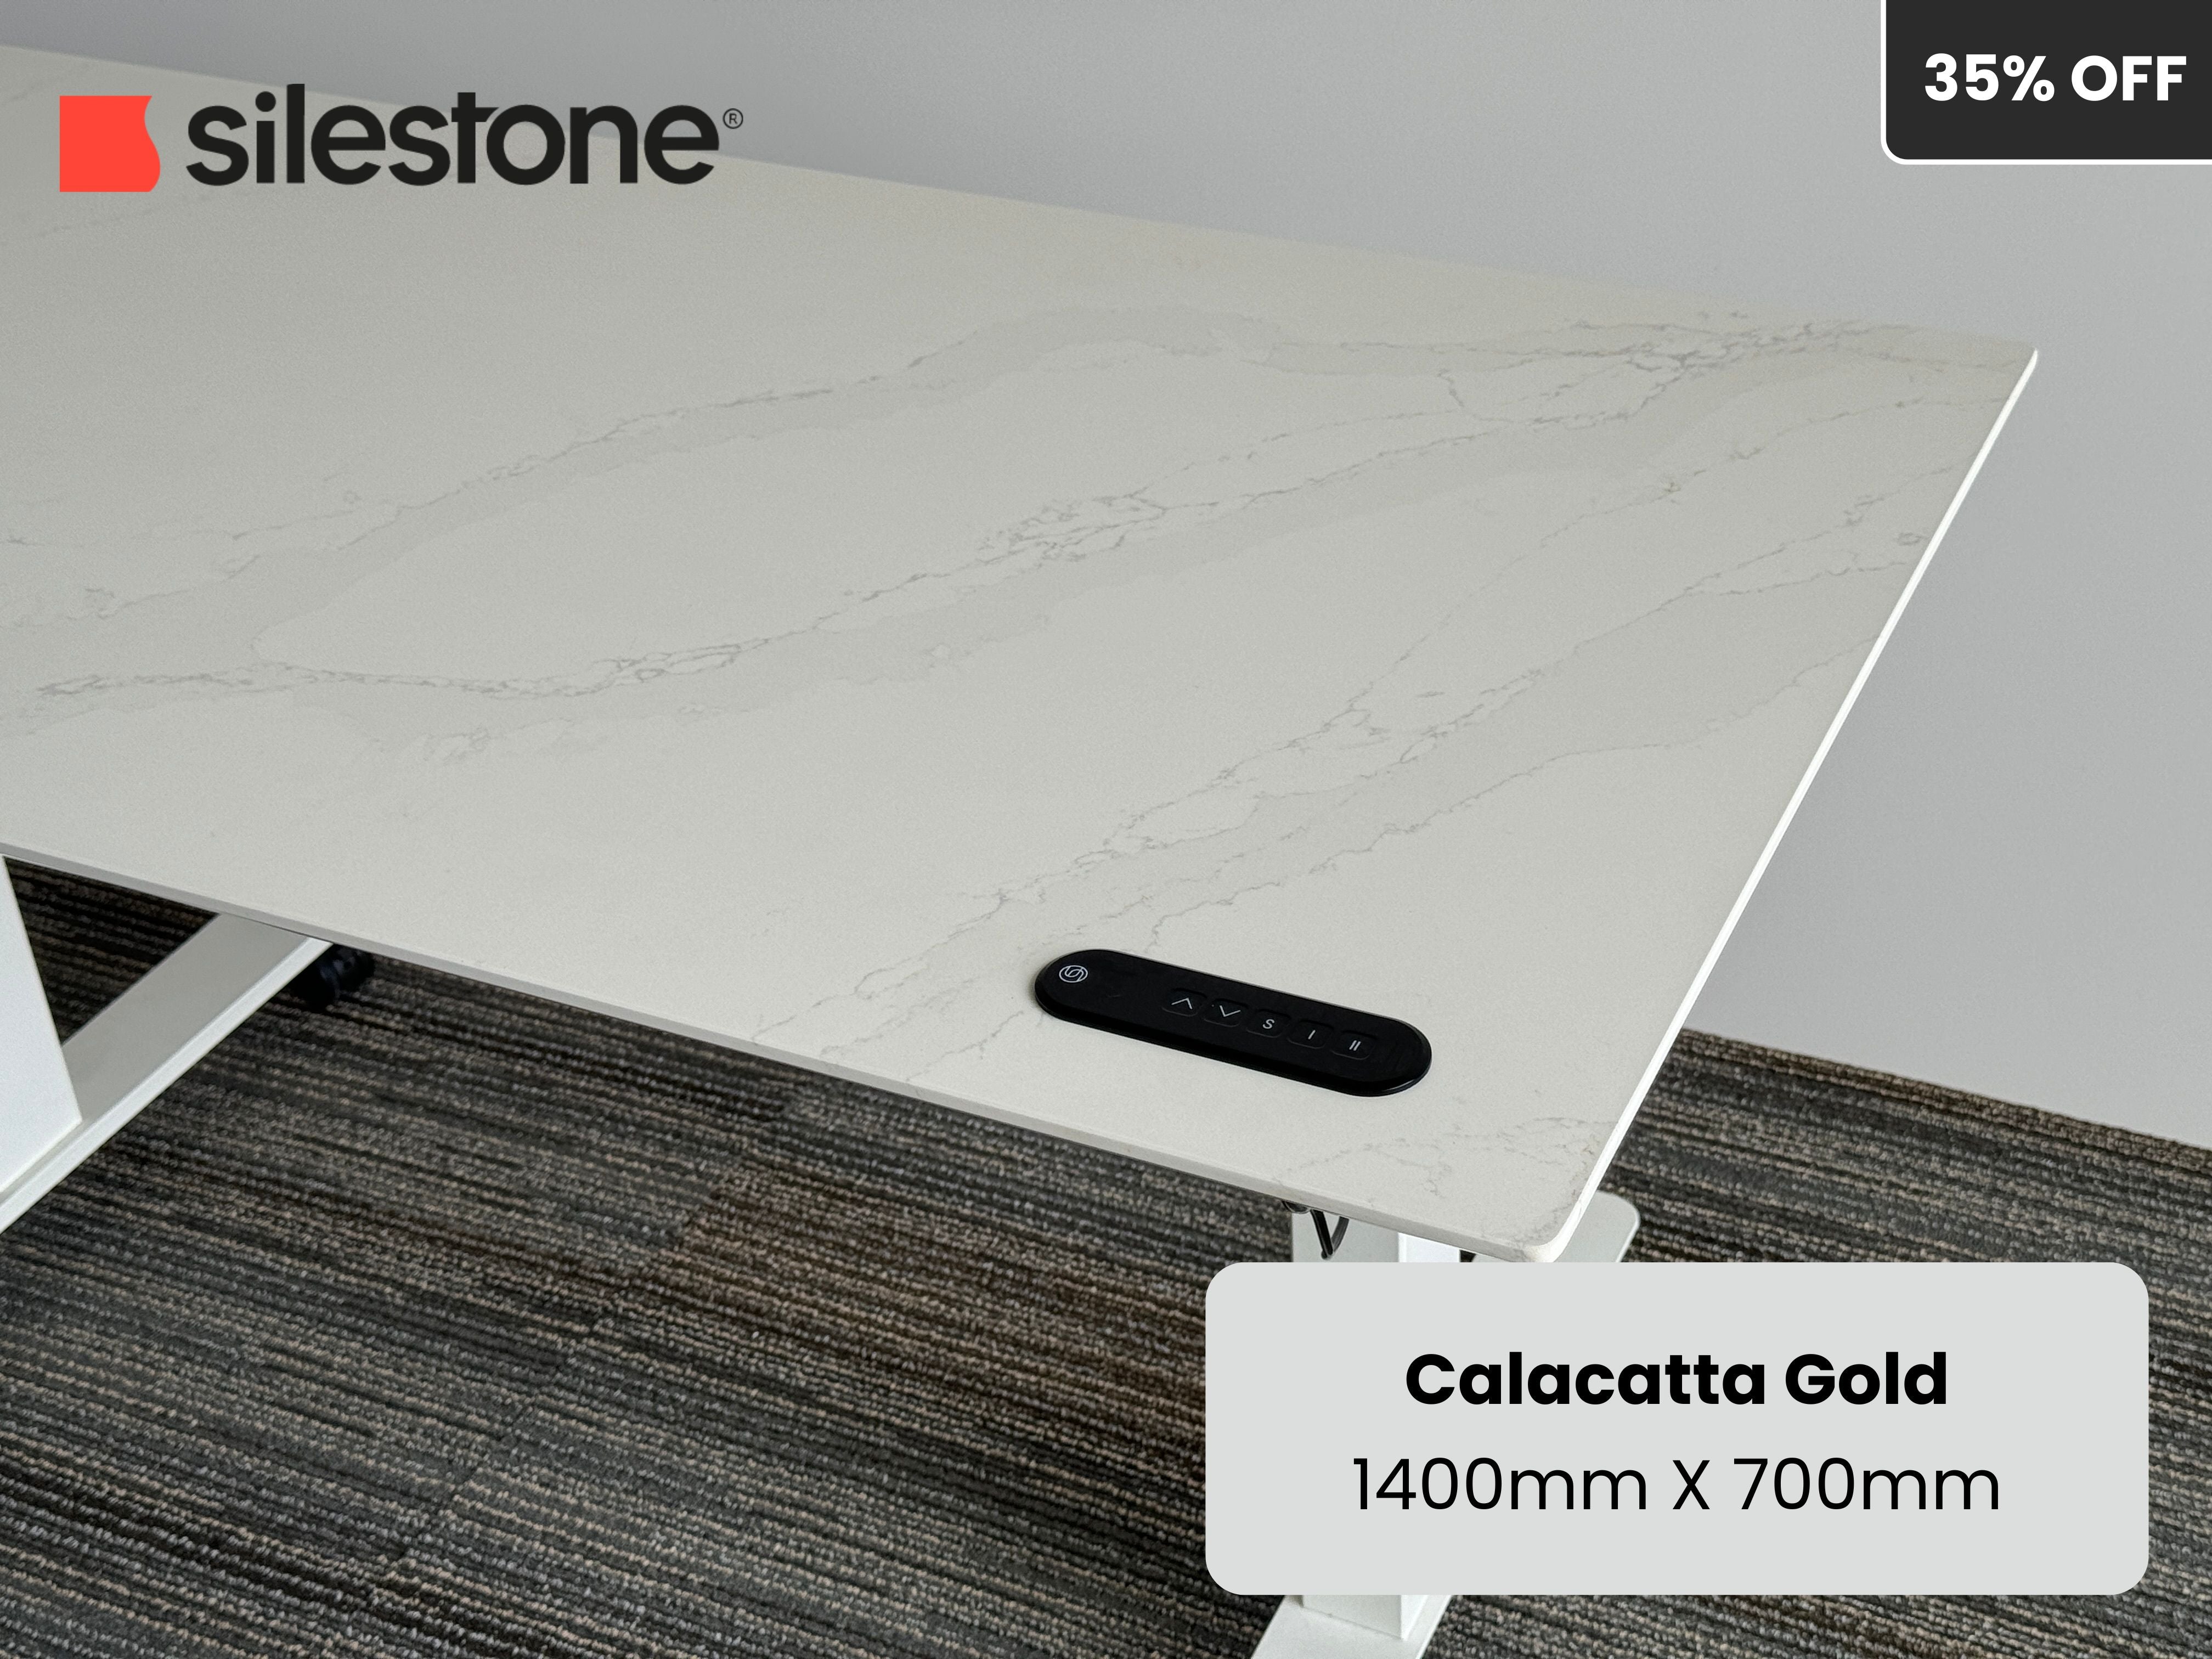 Calacatta Gold Silestone Standing Desk